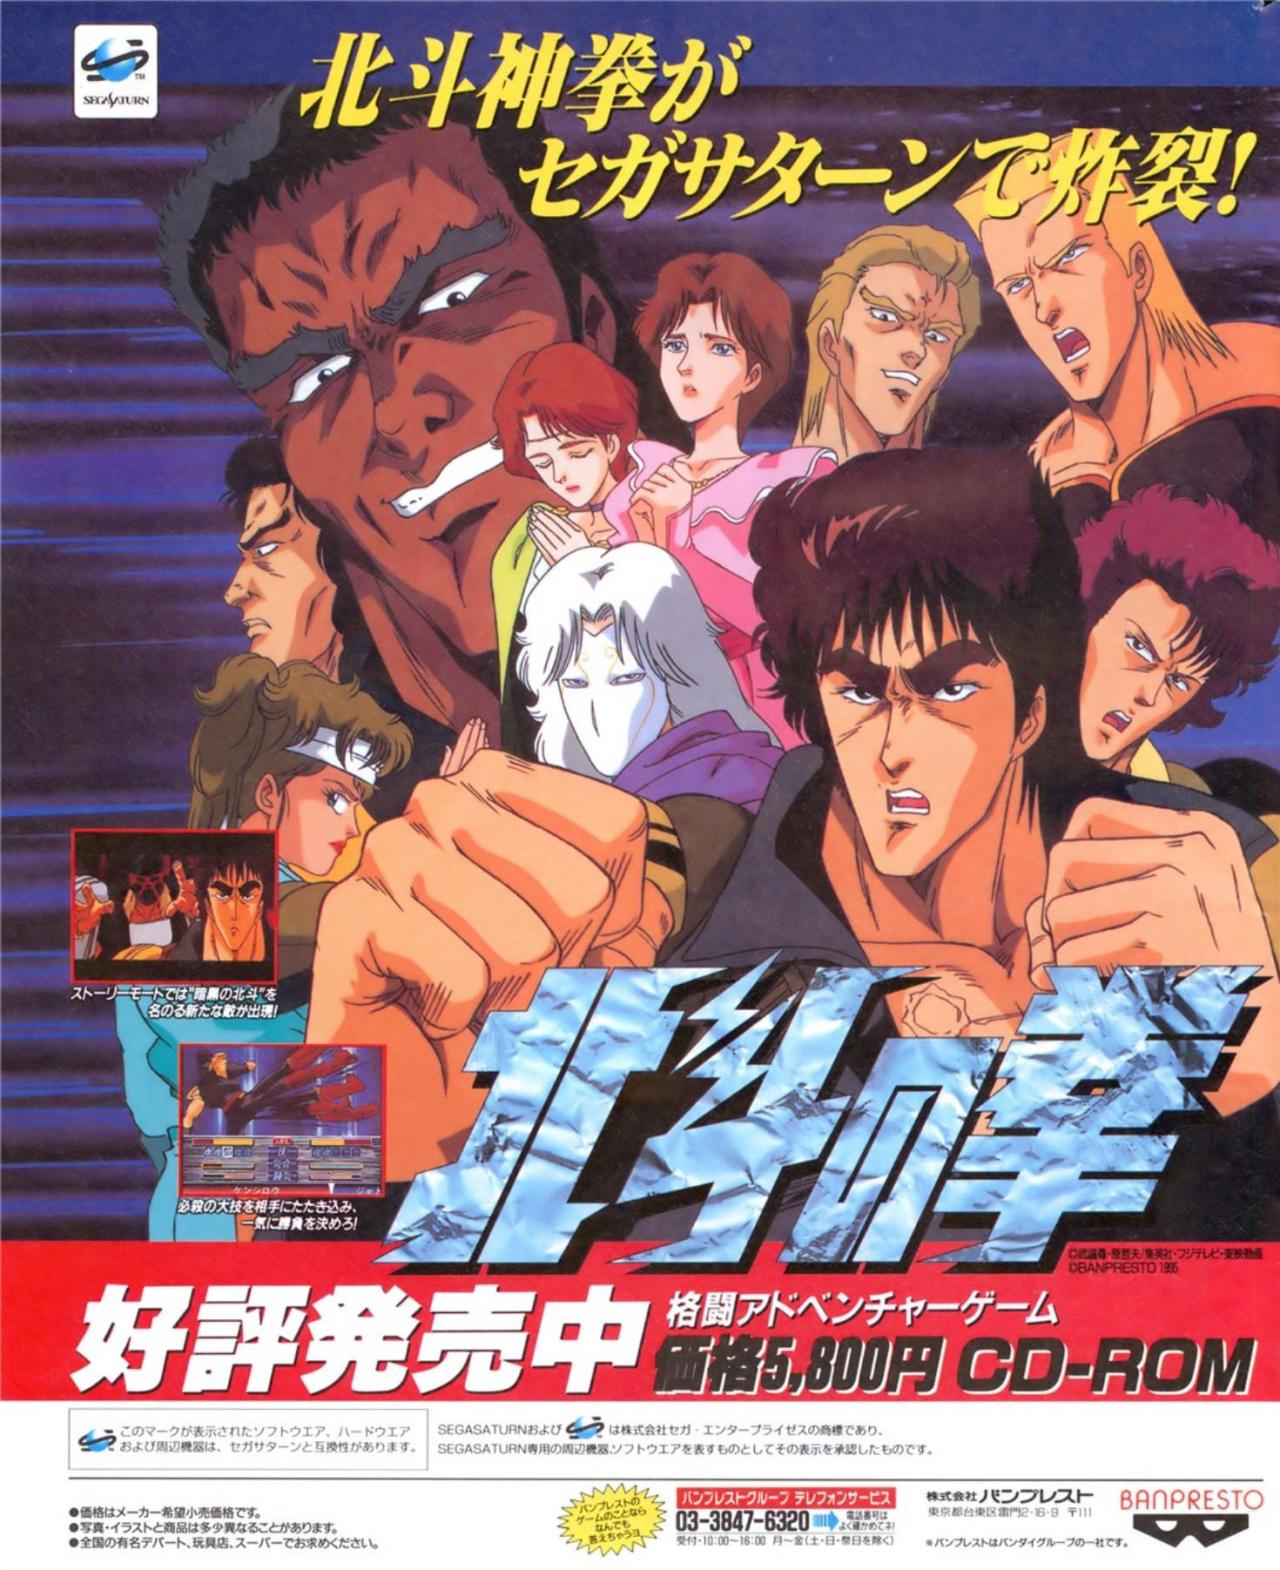 ‘Hokuto no Ken’
[’北斗の拳’][SAT] [JAPAN] [MAGAZINE] [1996]
• Saturn Fan, February 9, 1996
• Scanned by Akane, via Retro CDN